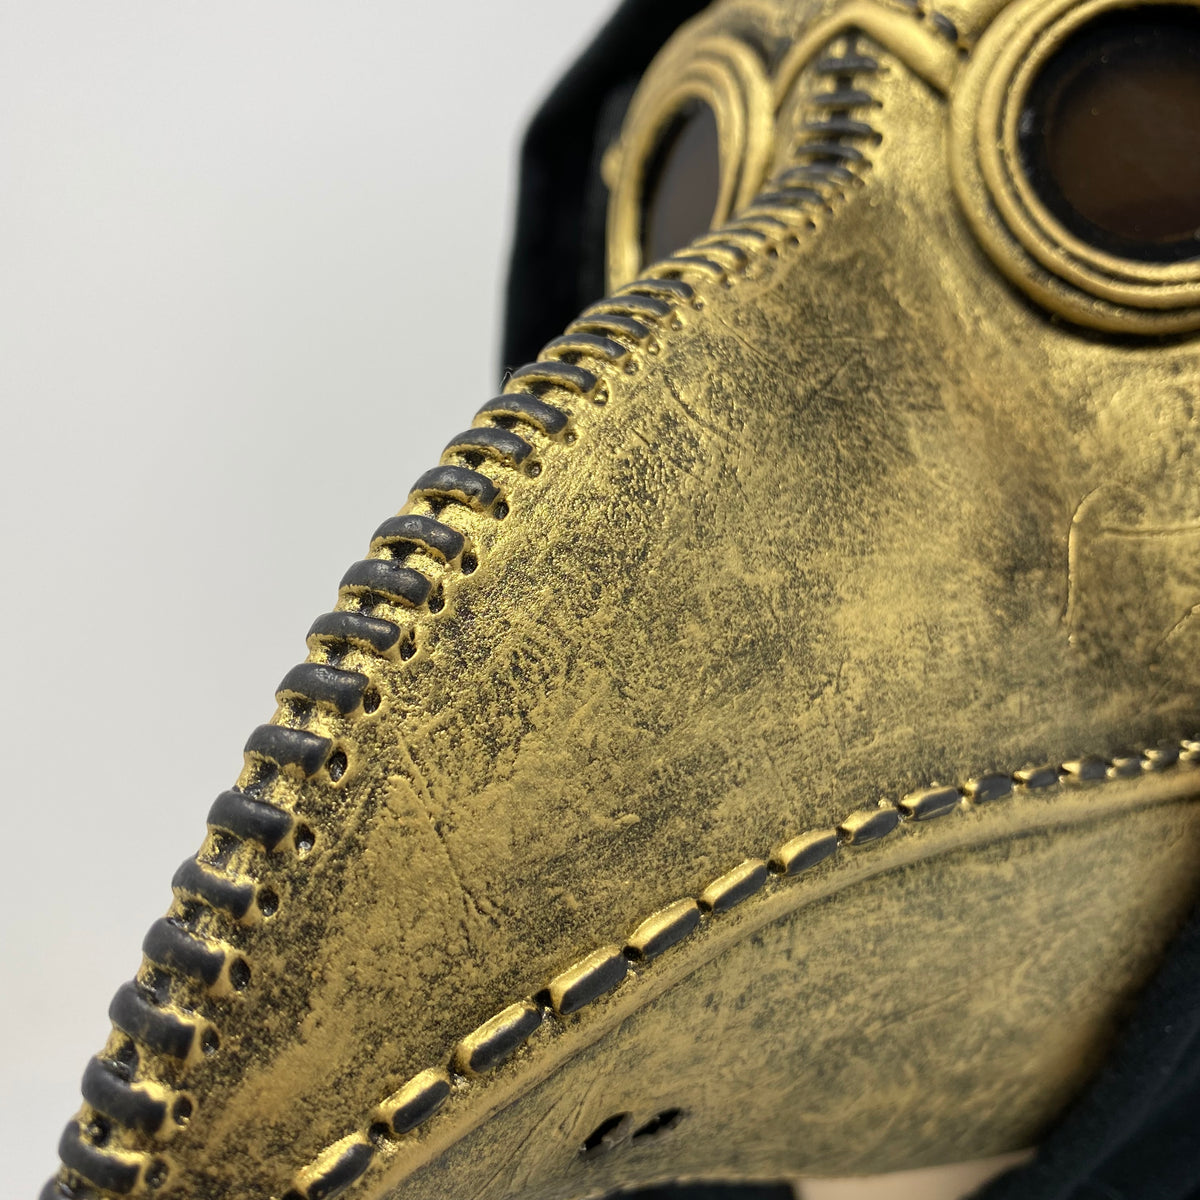 Hooded Plague Doctor Masks.